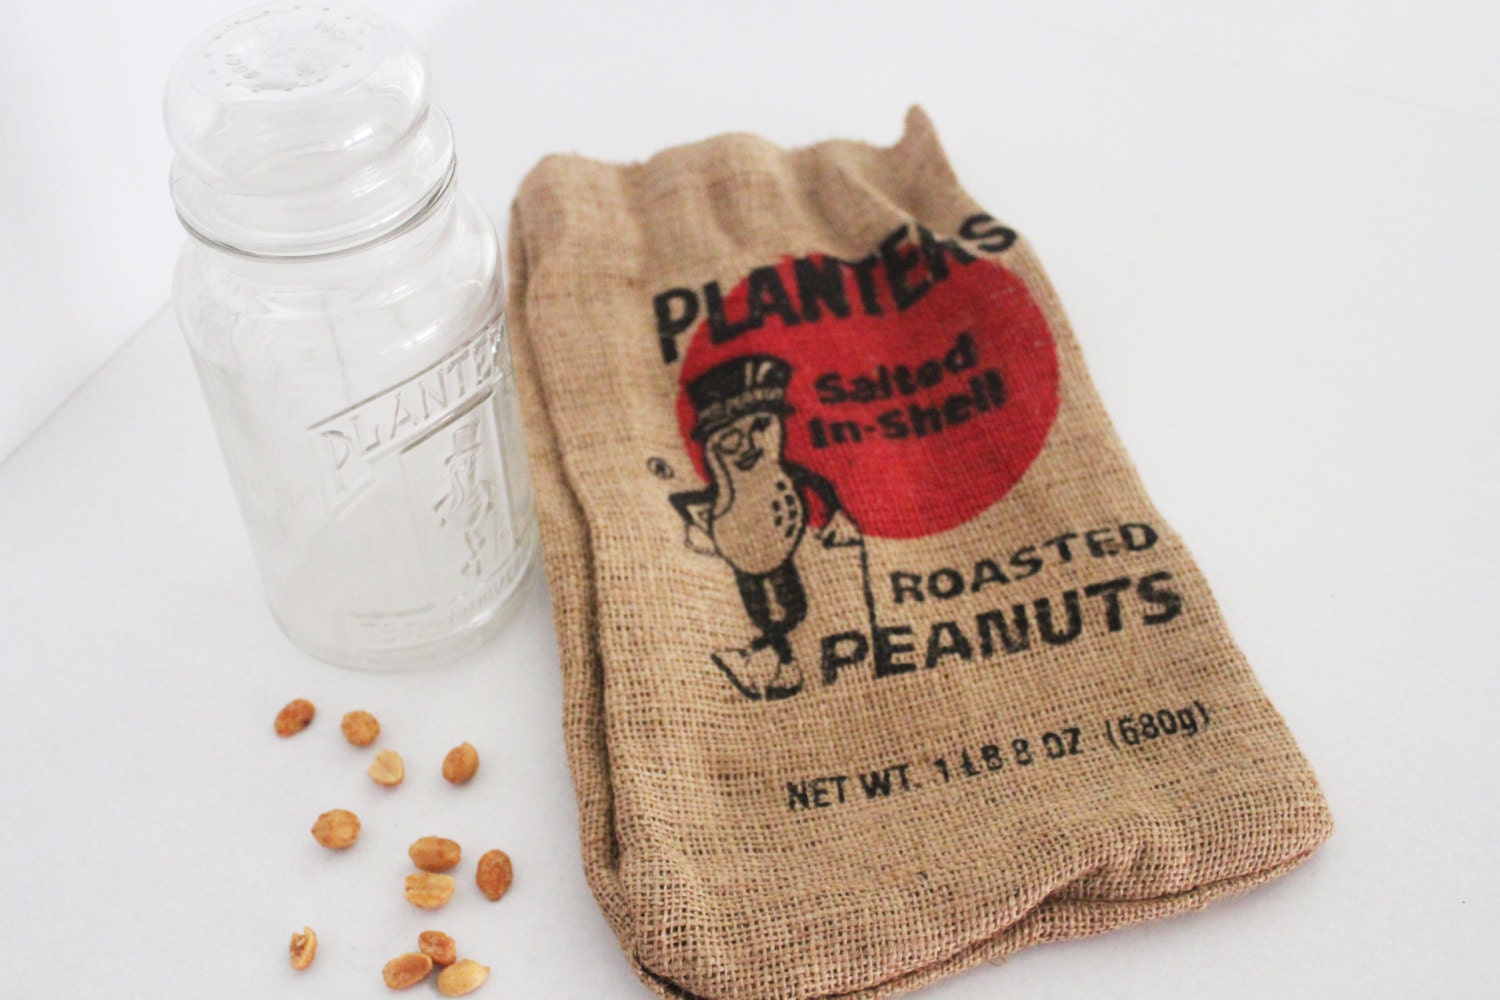 Vintage Planters Peanuts Burlap Sack and Glass Jar1500 x 1000